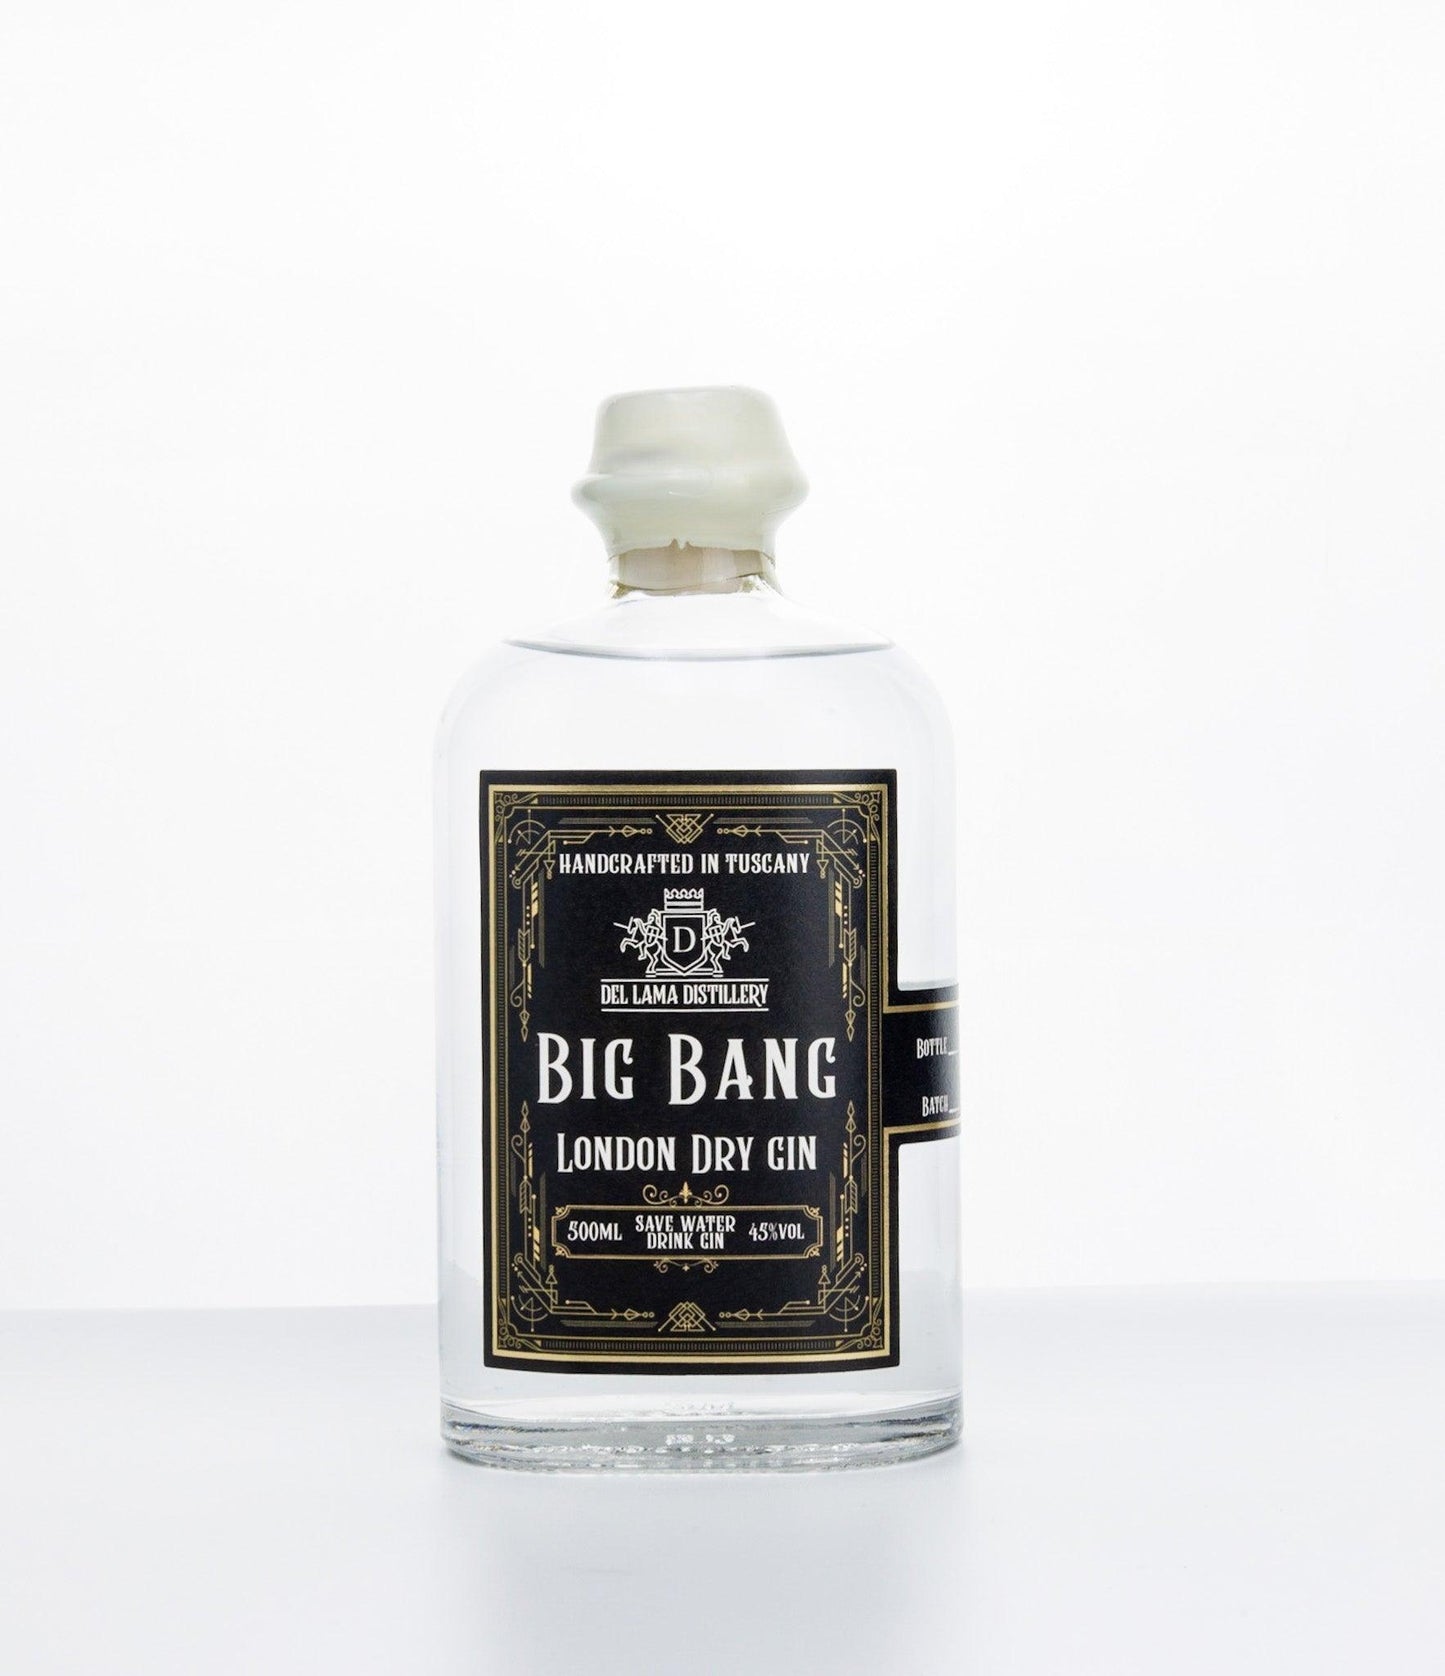 Big Bang - London Dry Gin - Del Lama Distillery